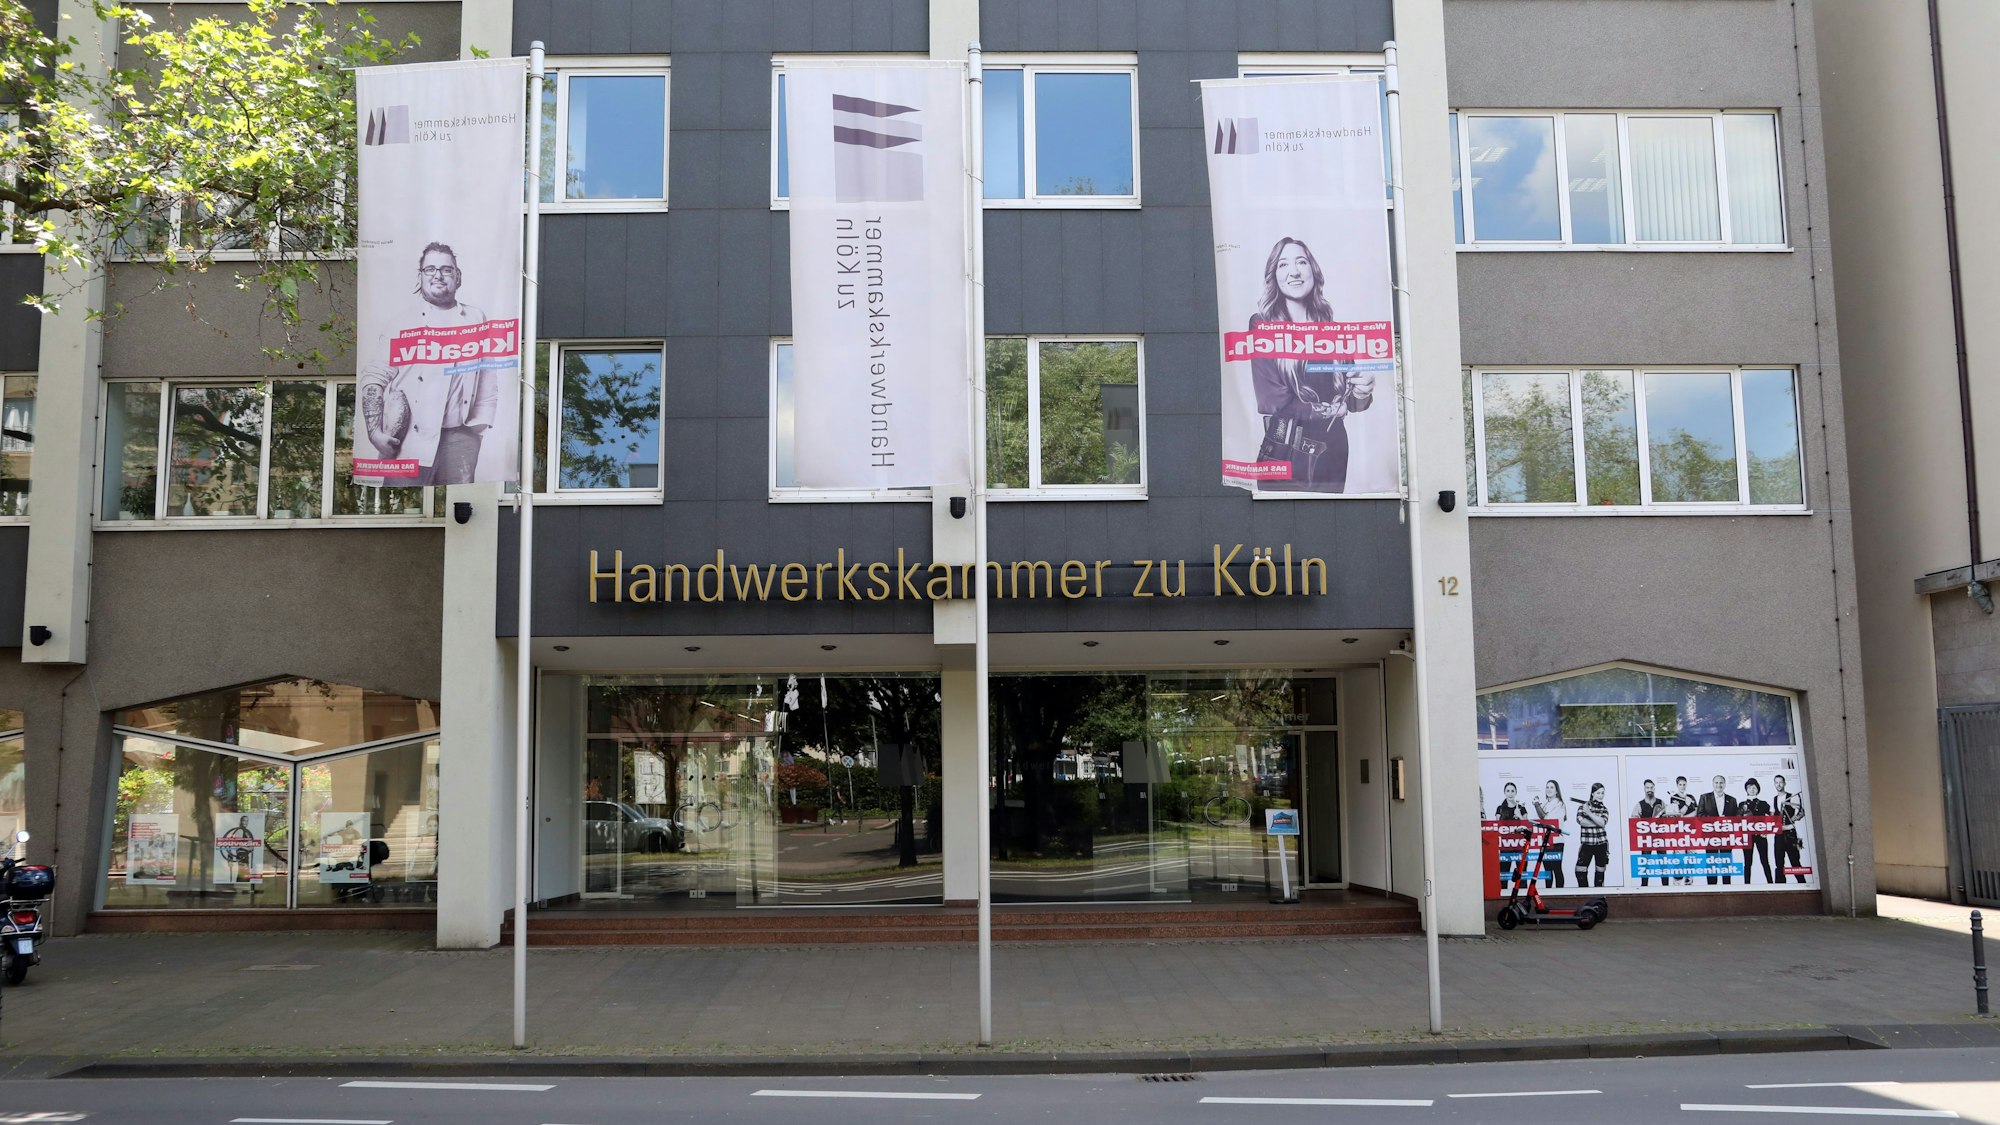 Handwerkskammer Köln
Heumarkt Köln Deutschland
31.05.2021
Copyright
Eduard Bopp Sportfotografie
mail@fotobopp.de
